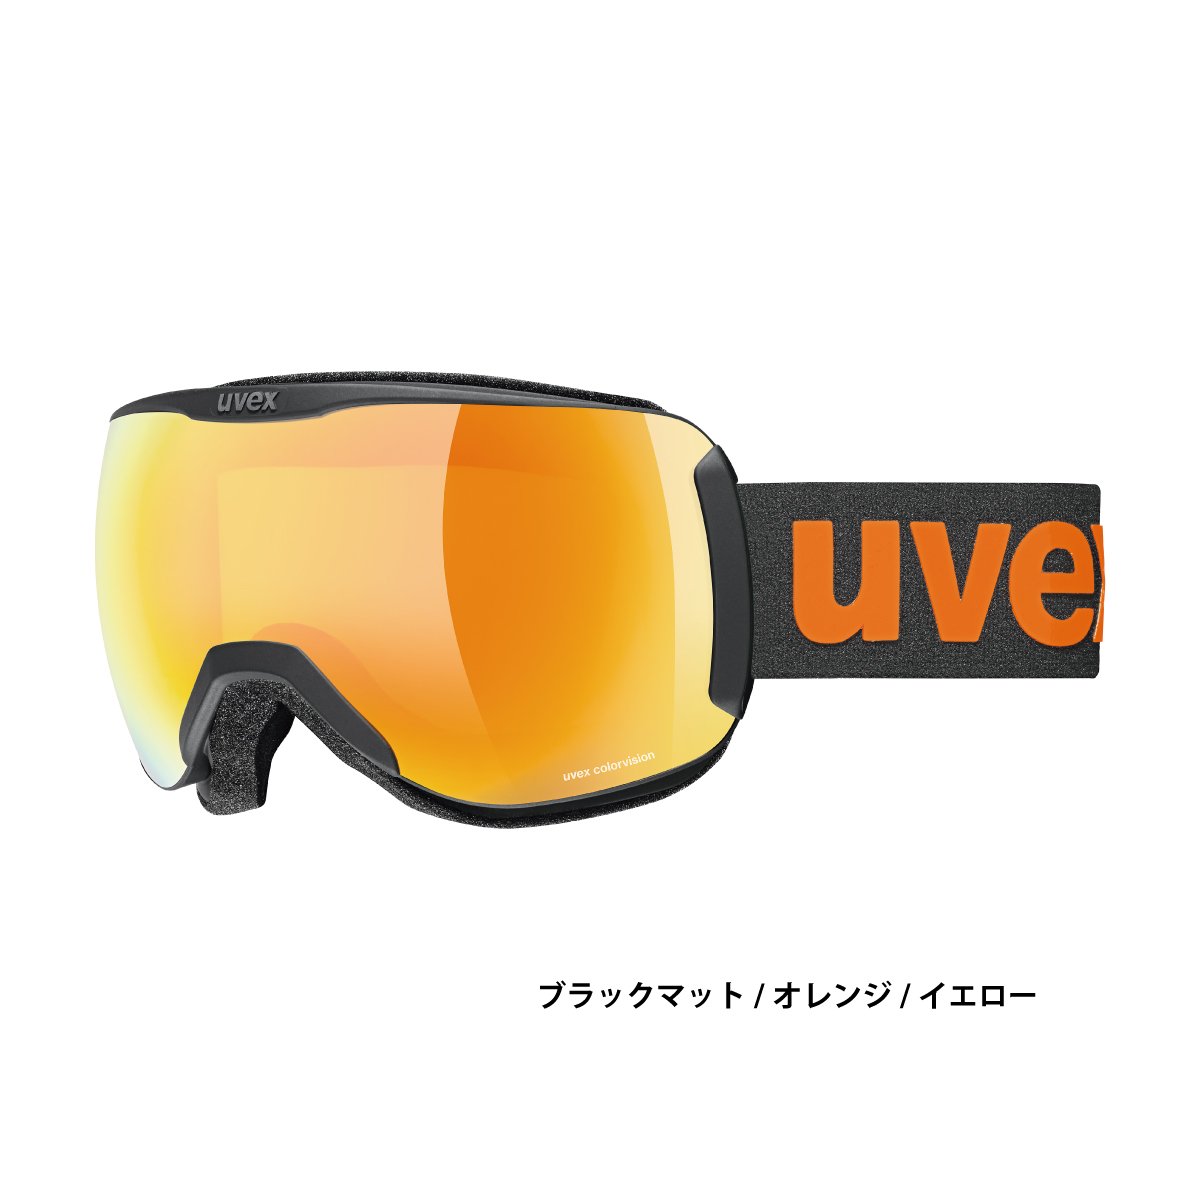 uvex(ウベックス) スキースノーボードゴーグル ユニセックス ハイコントラストミラー シングルレンズ contest CV 人気商品販売中 